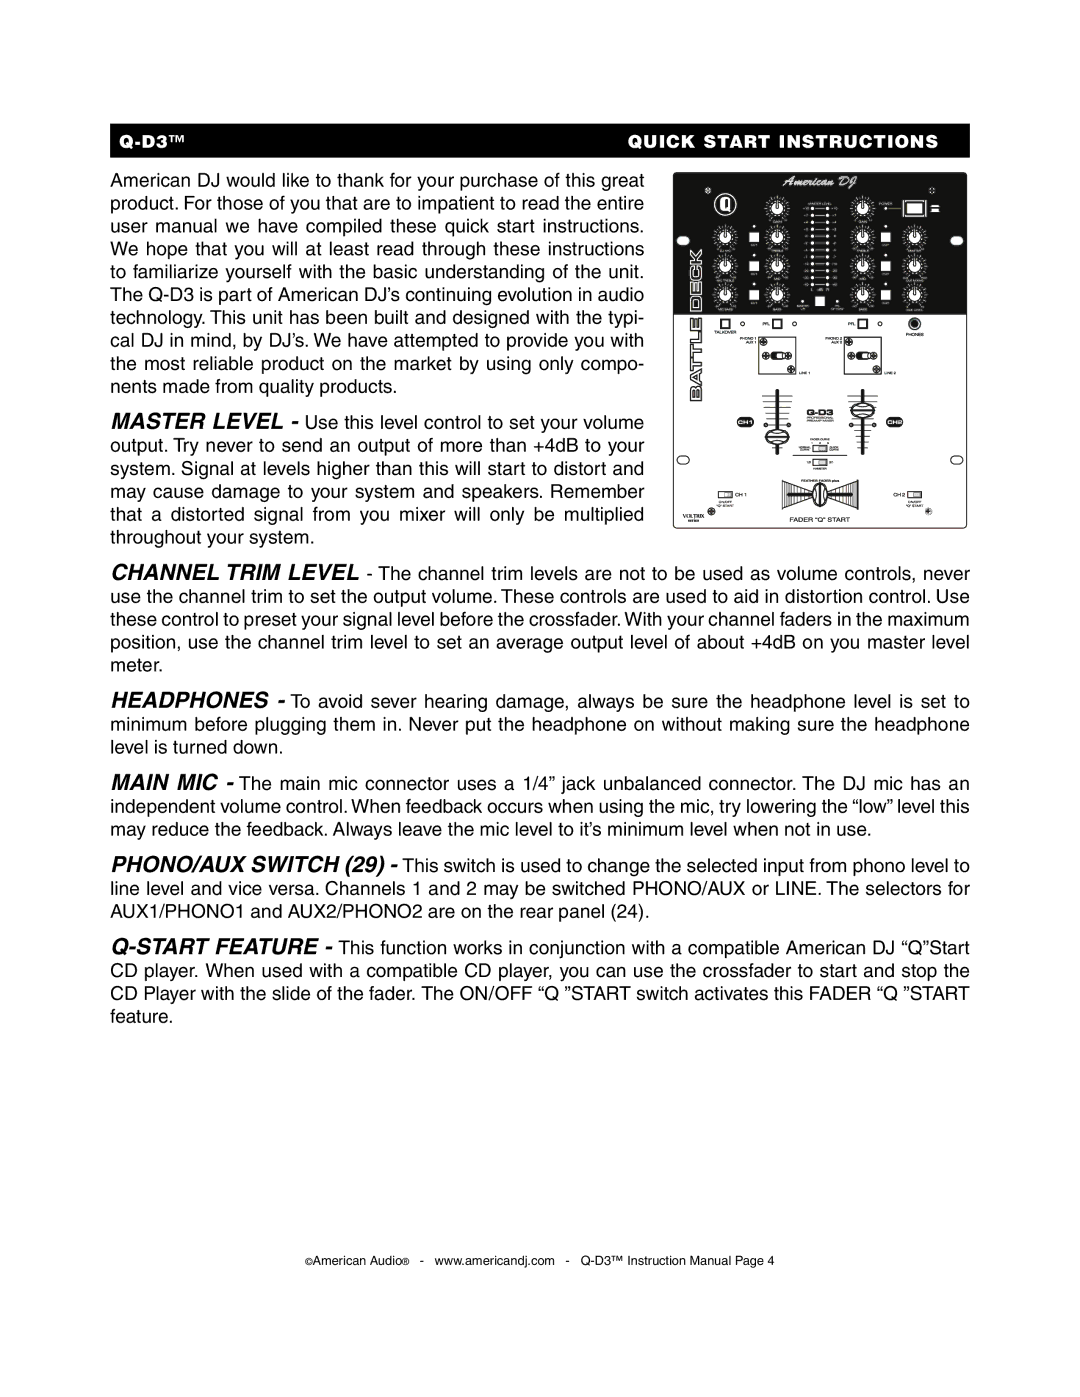 American Audio Q-D3 manual Quick Start Instructions 